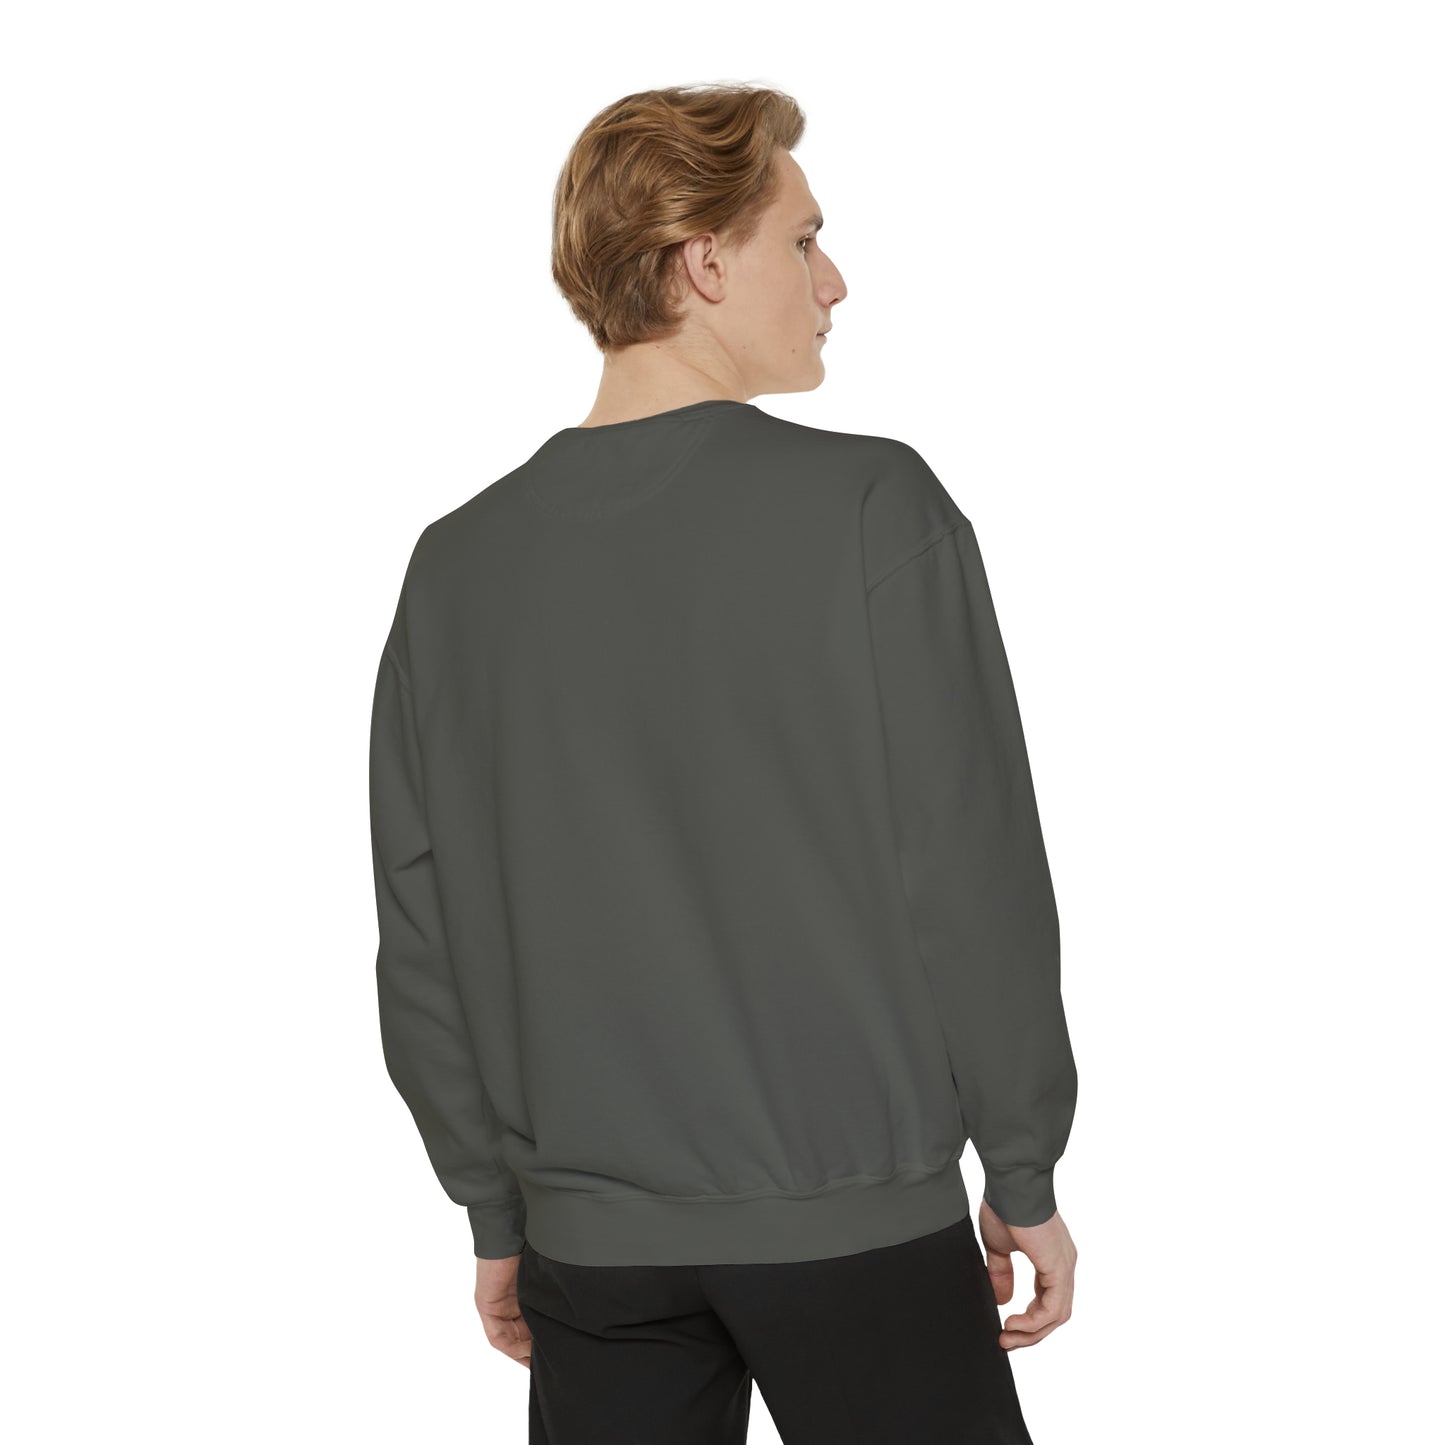 But God Unisex Garment-Dyed Sweatshirt